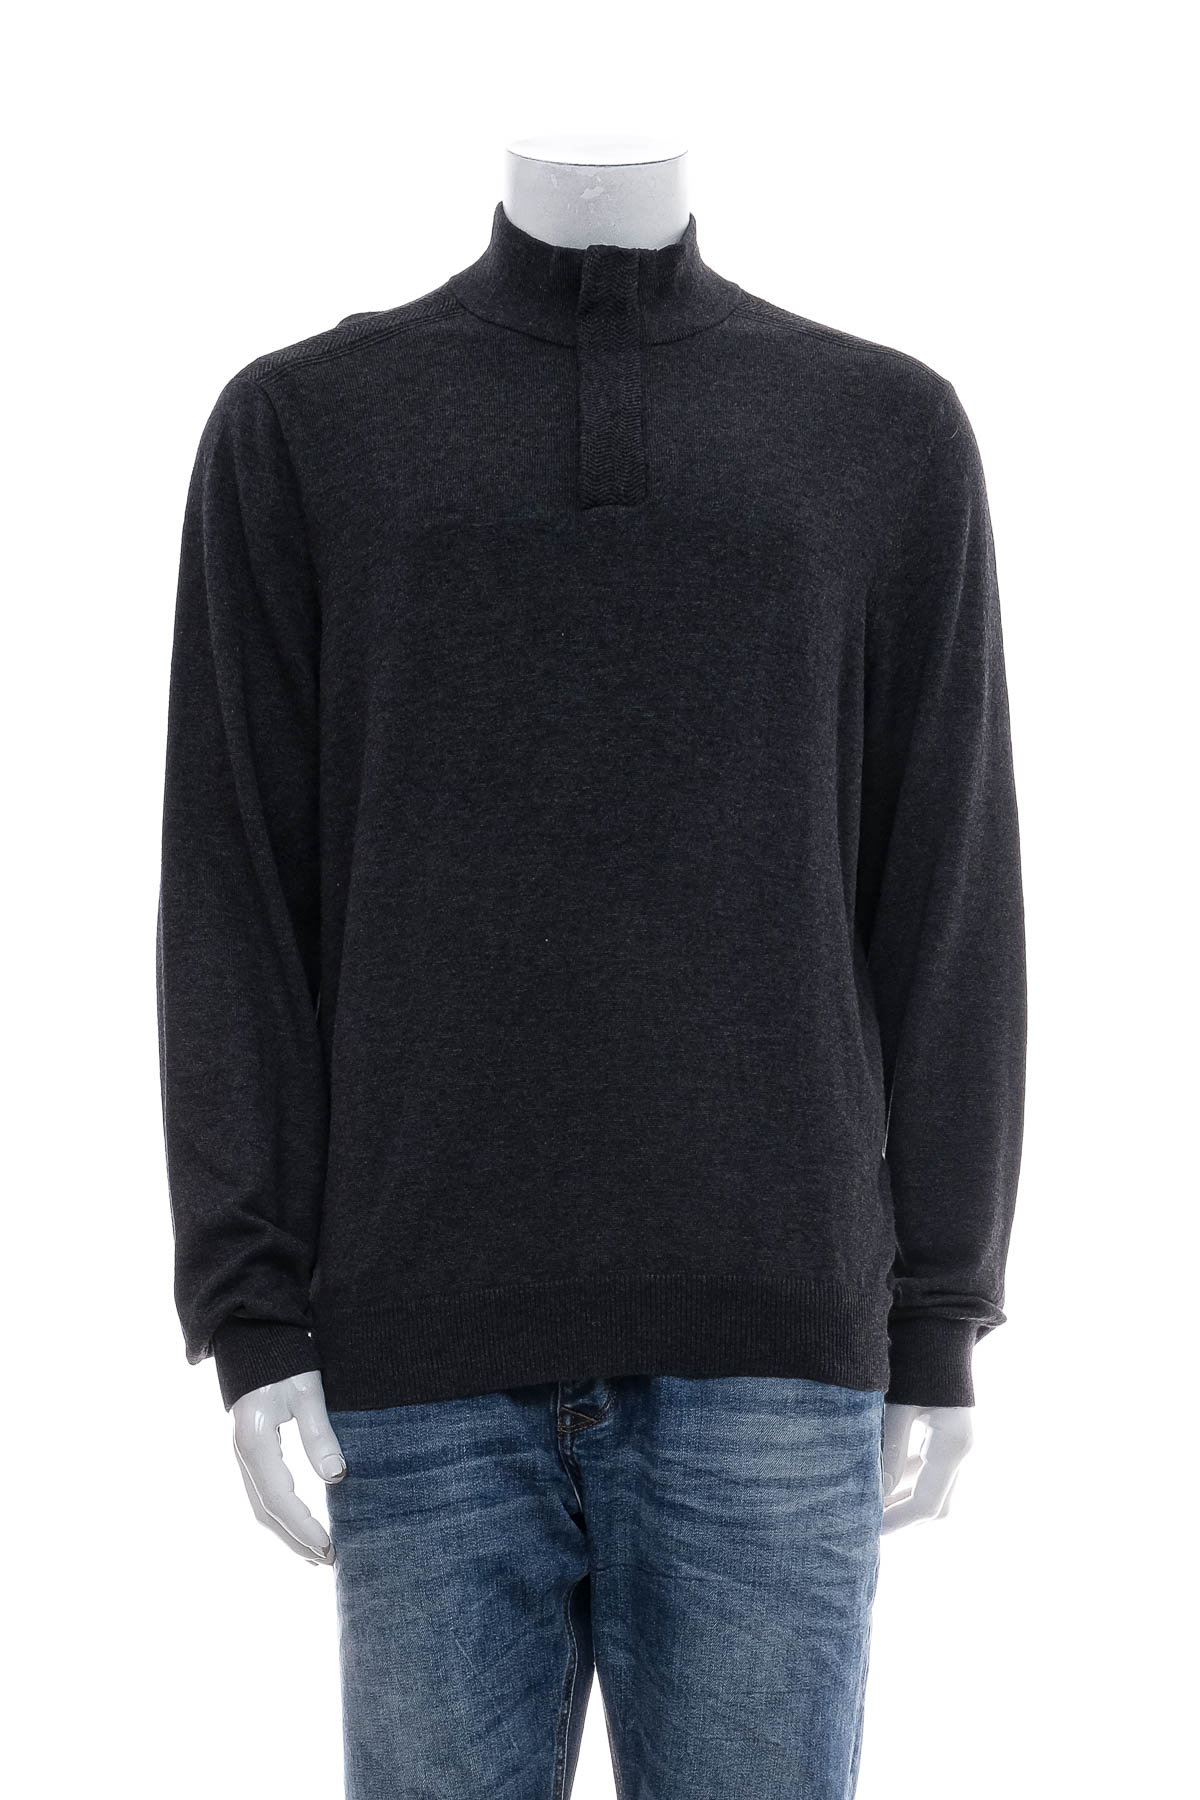 Men's sweater - Perry Ellis - 0